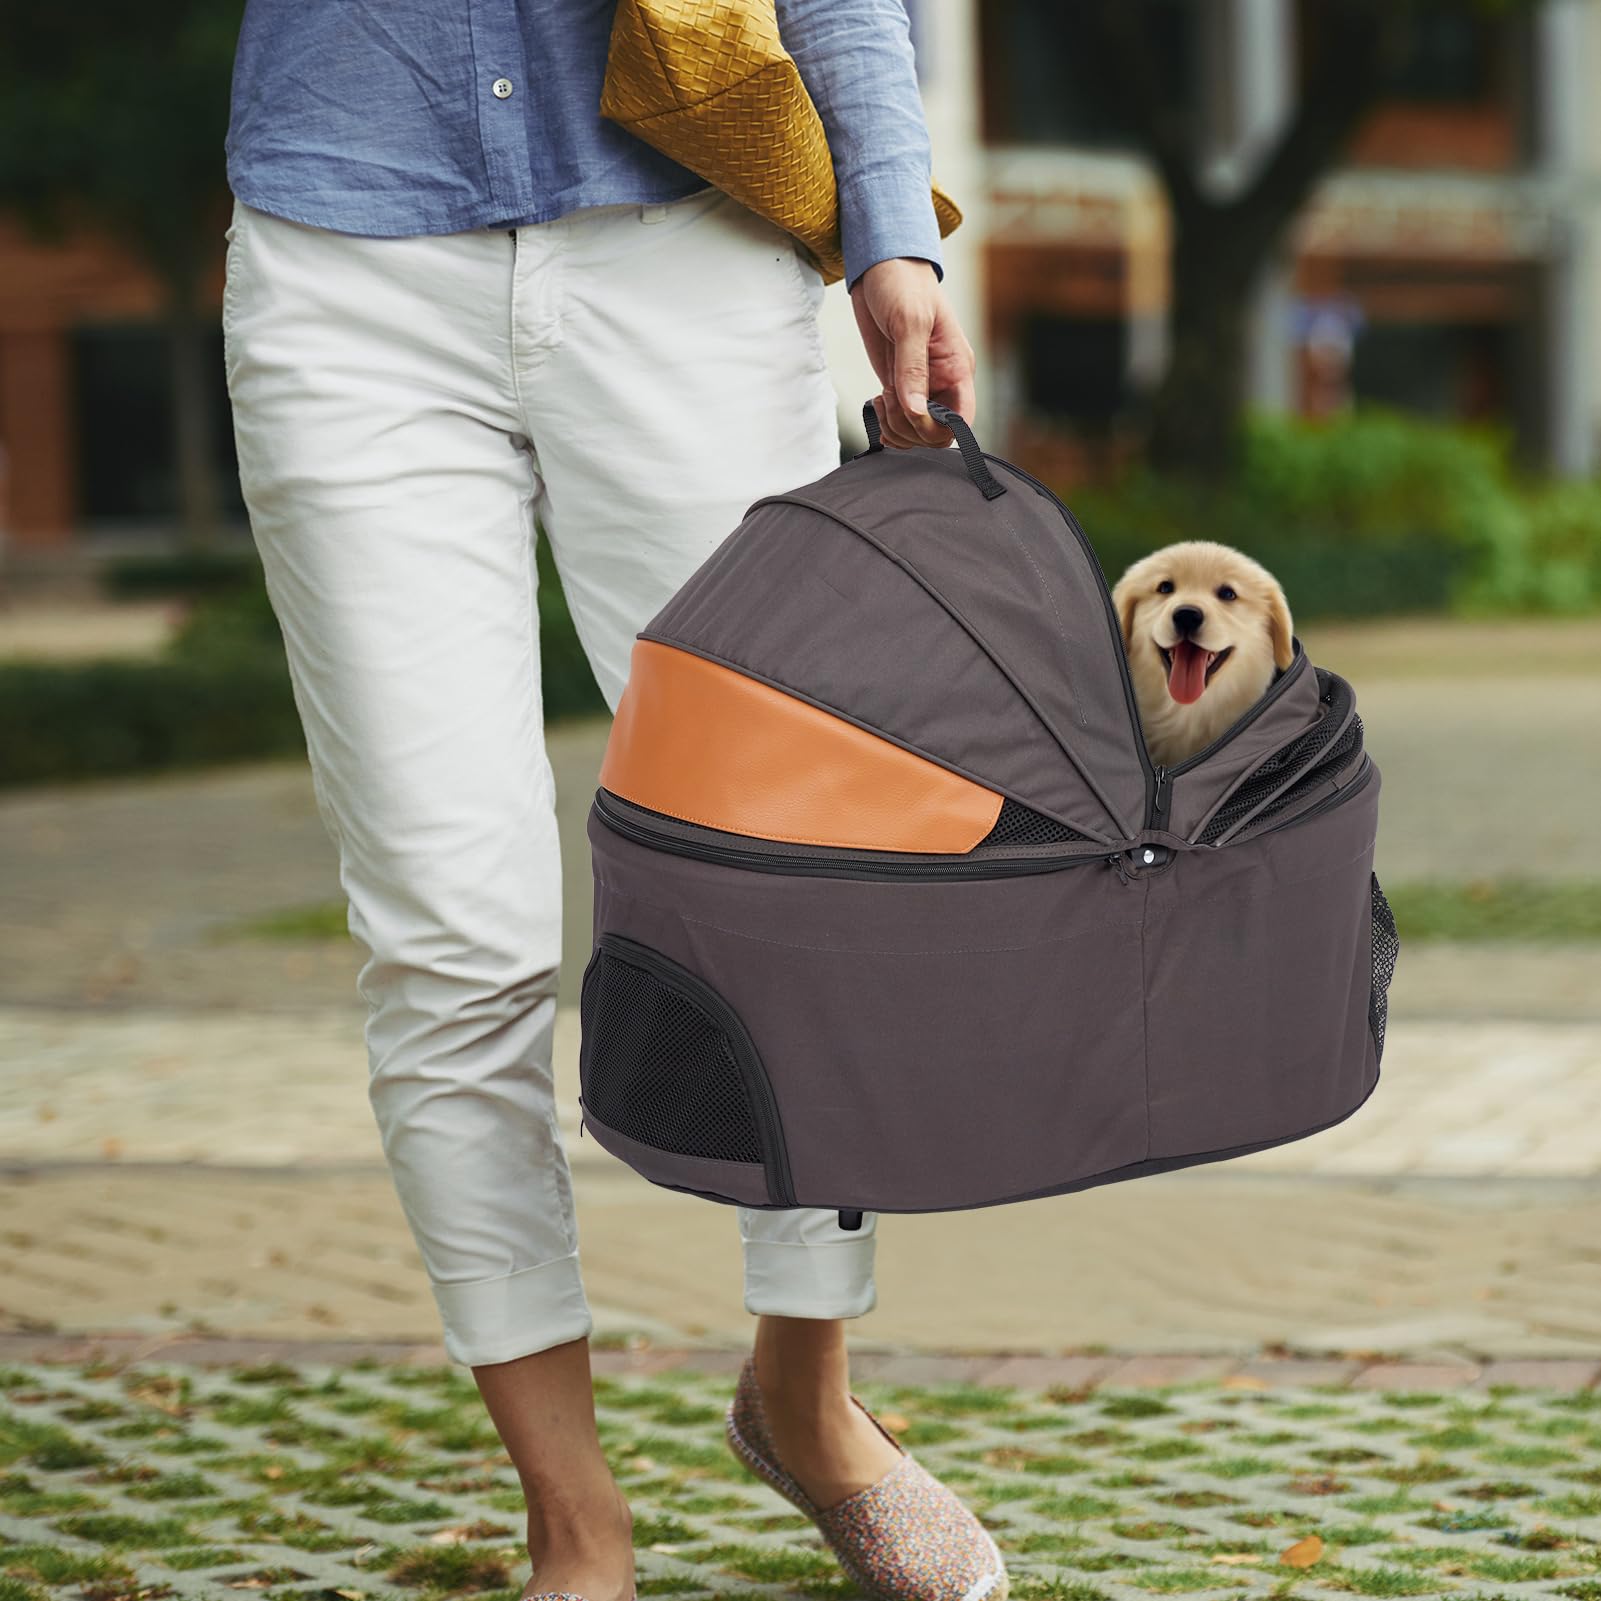 Multifunction Pet Travel System, Grey Orange, 3-in-1, Easy Fold